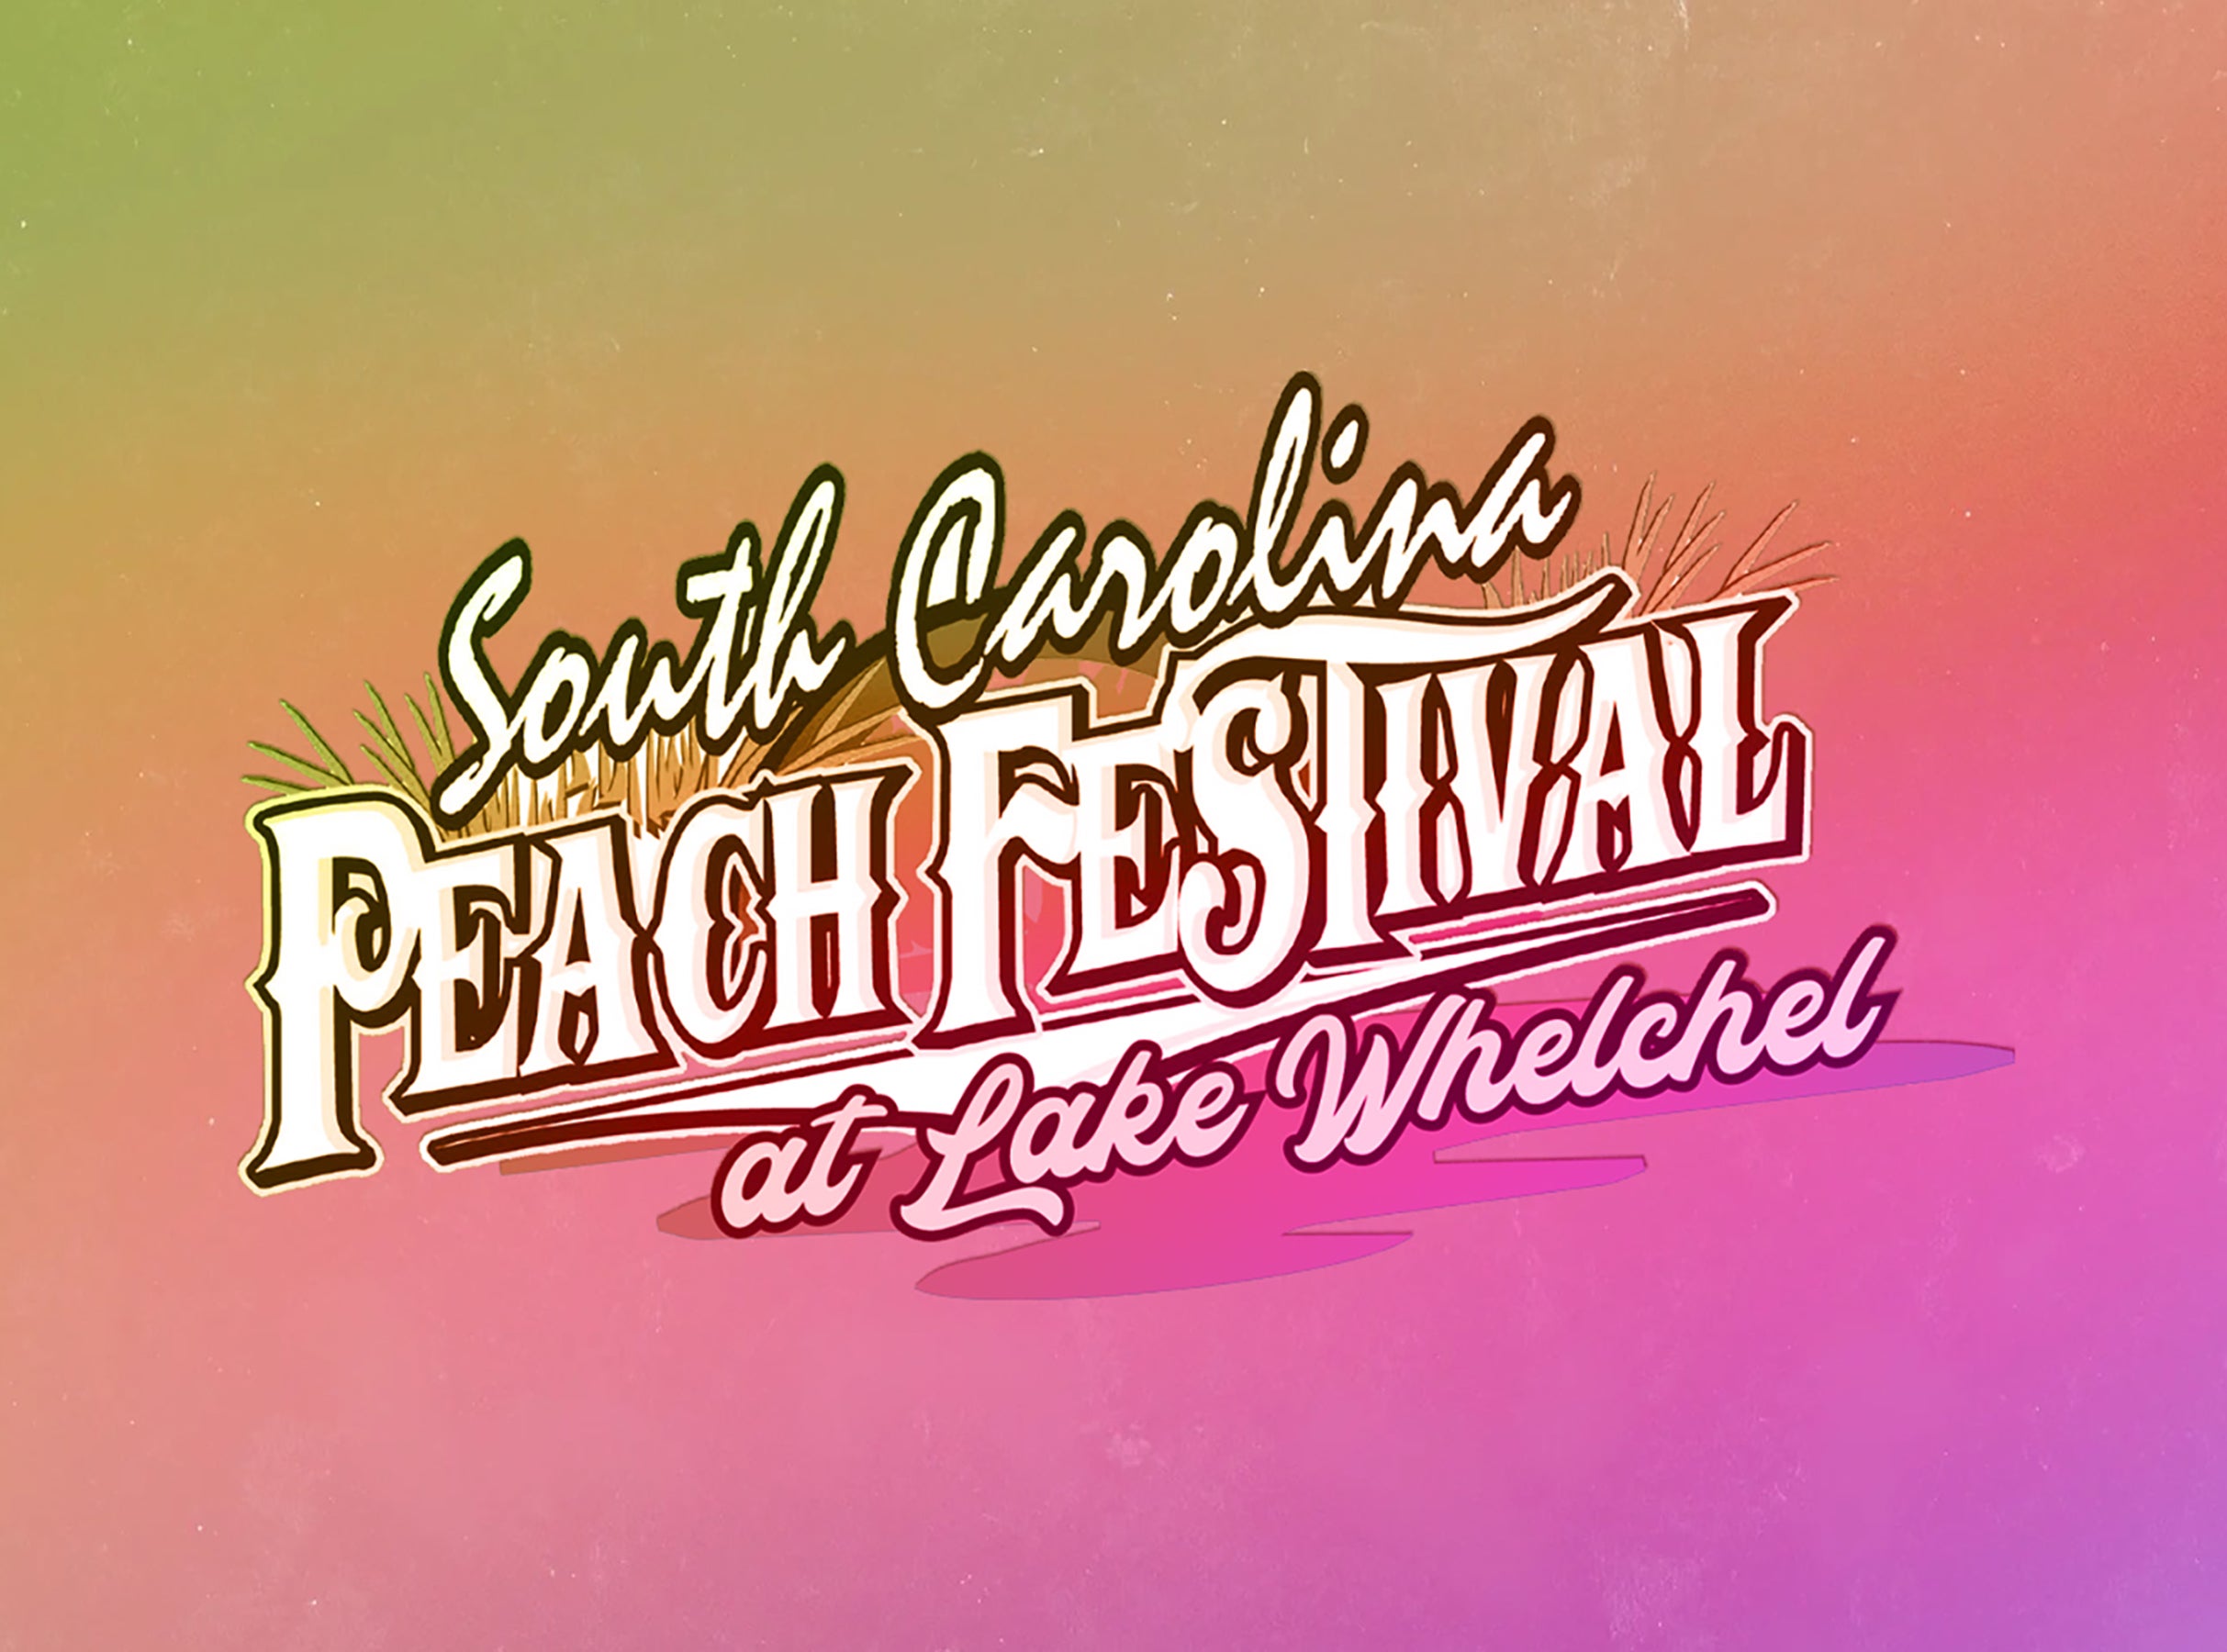 South Carolina Peach Festival at Lake Whelchel